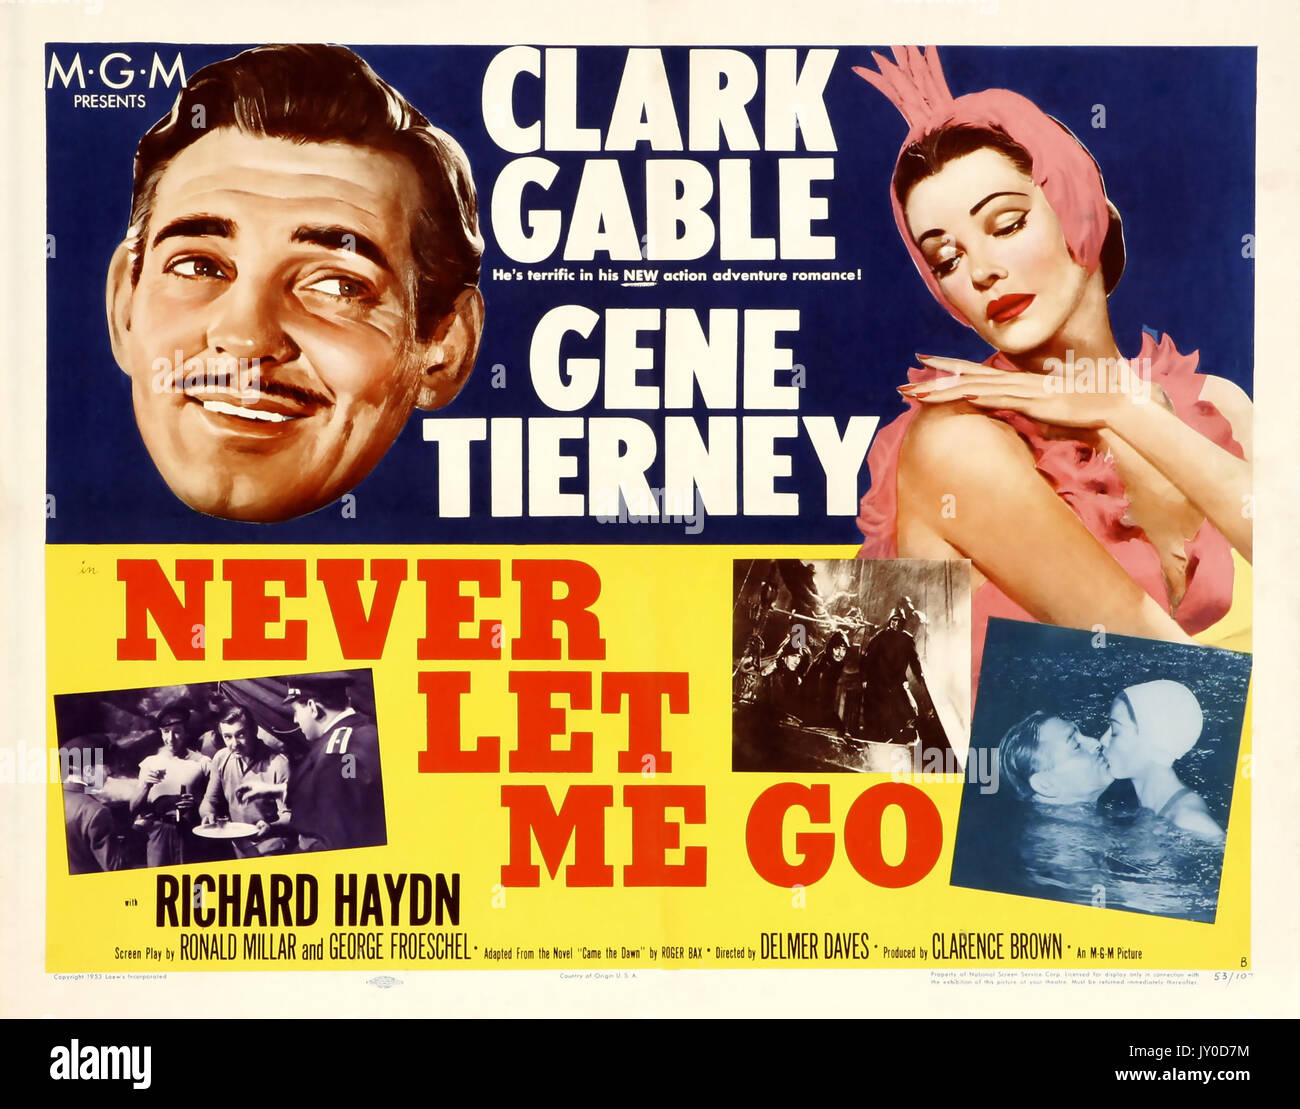 NEVER LET ME GO 1953 MGM Film mit Clark Gable und Gene Tierney Stockfoto